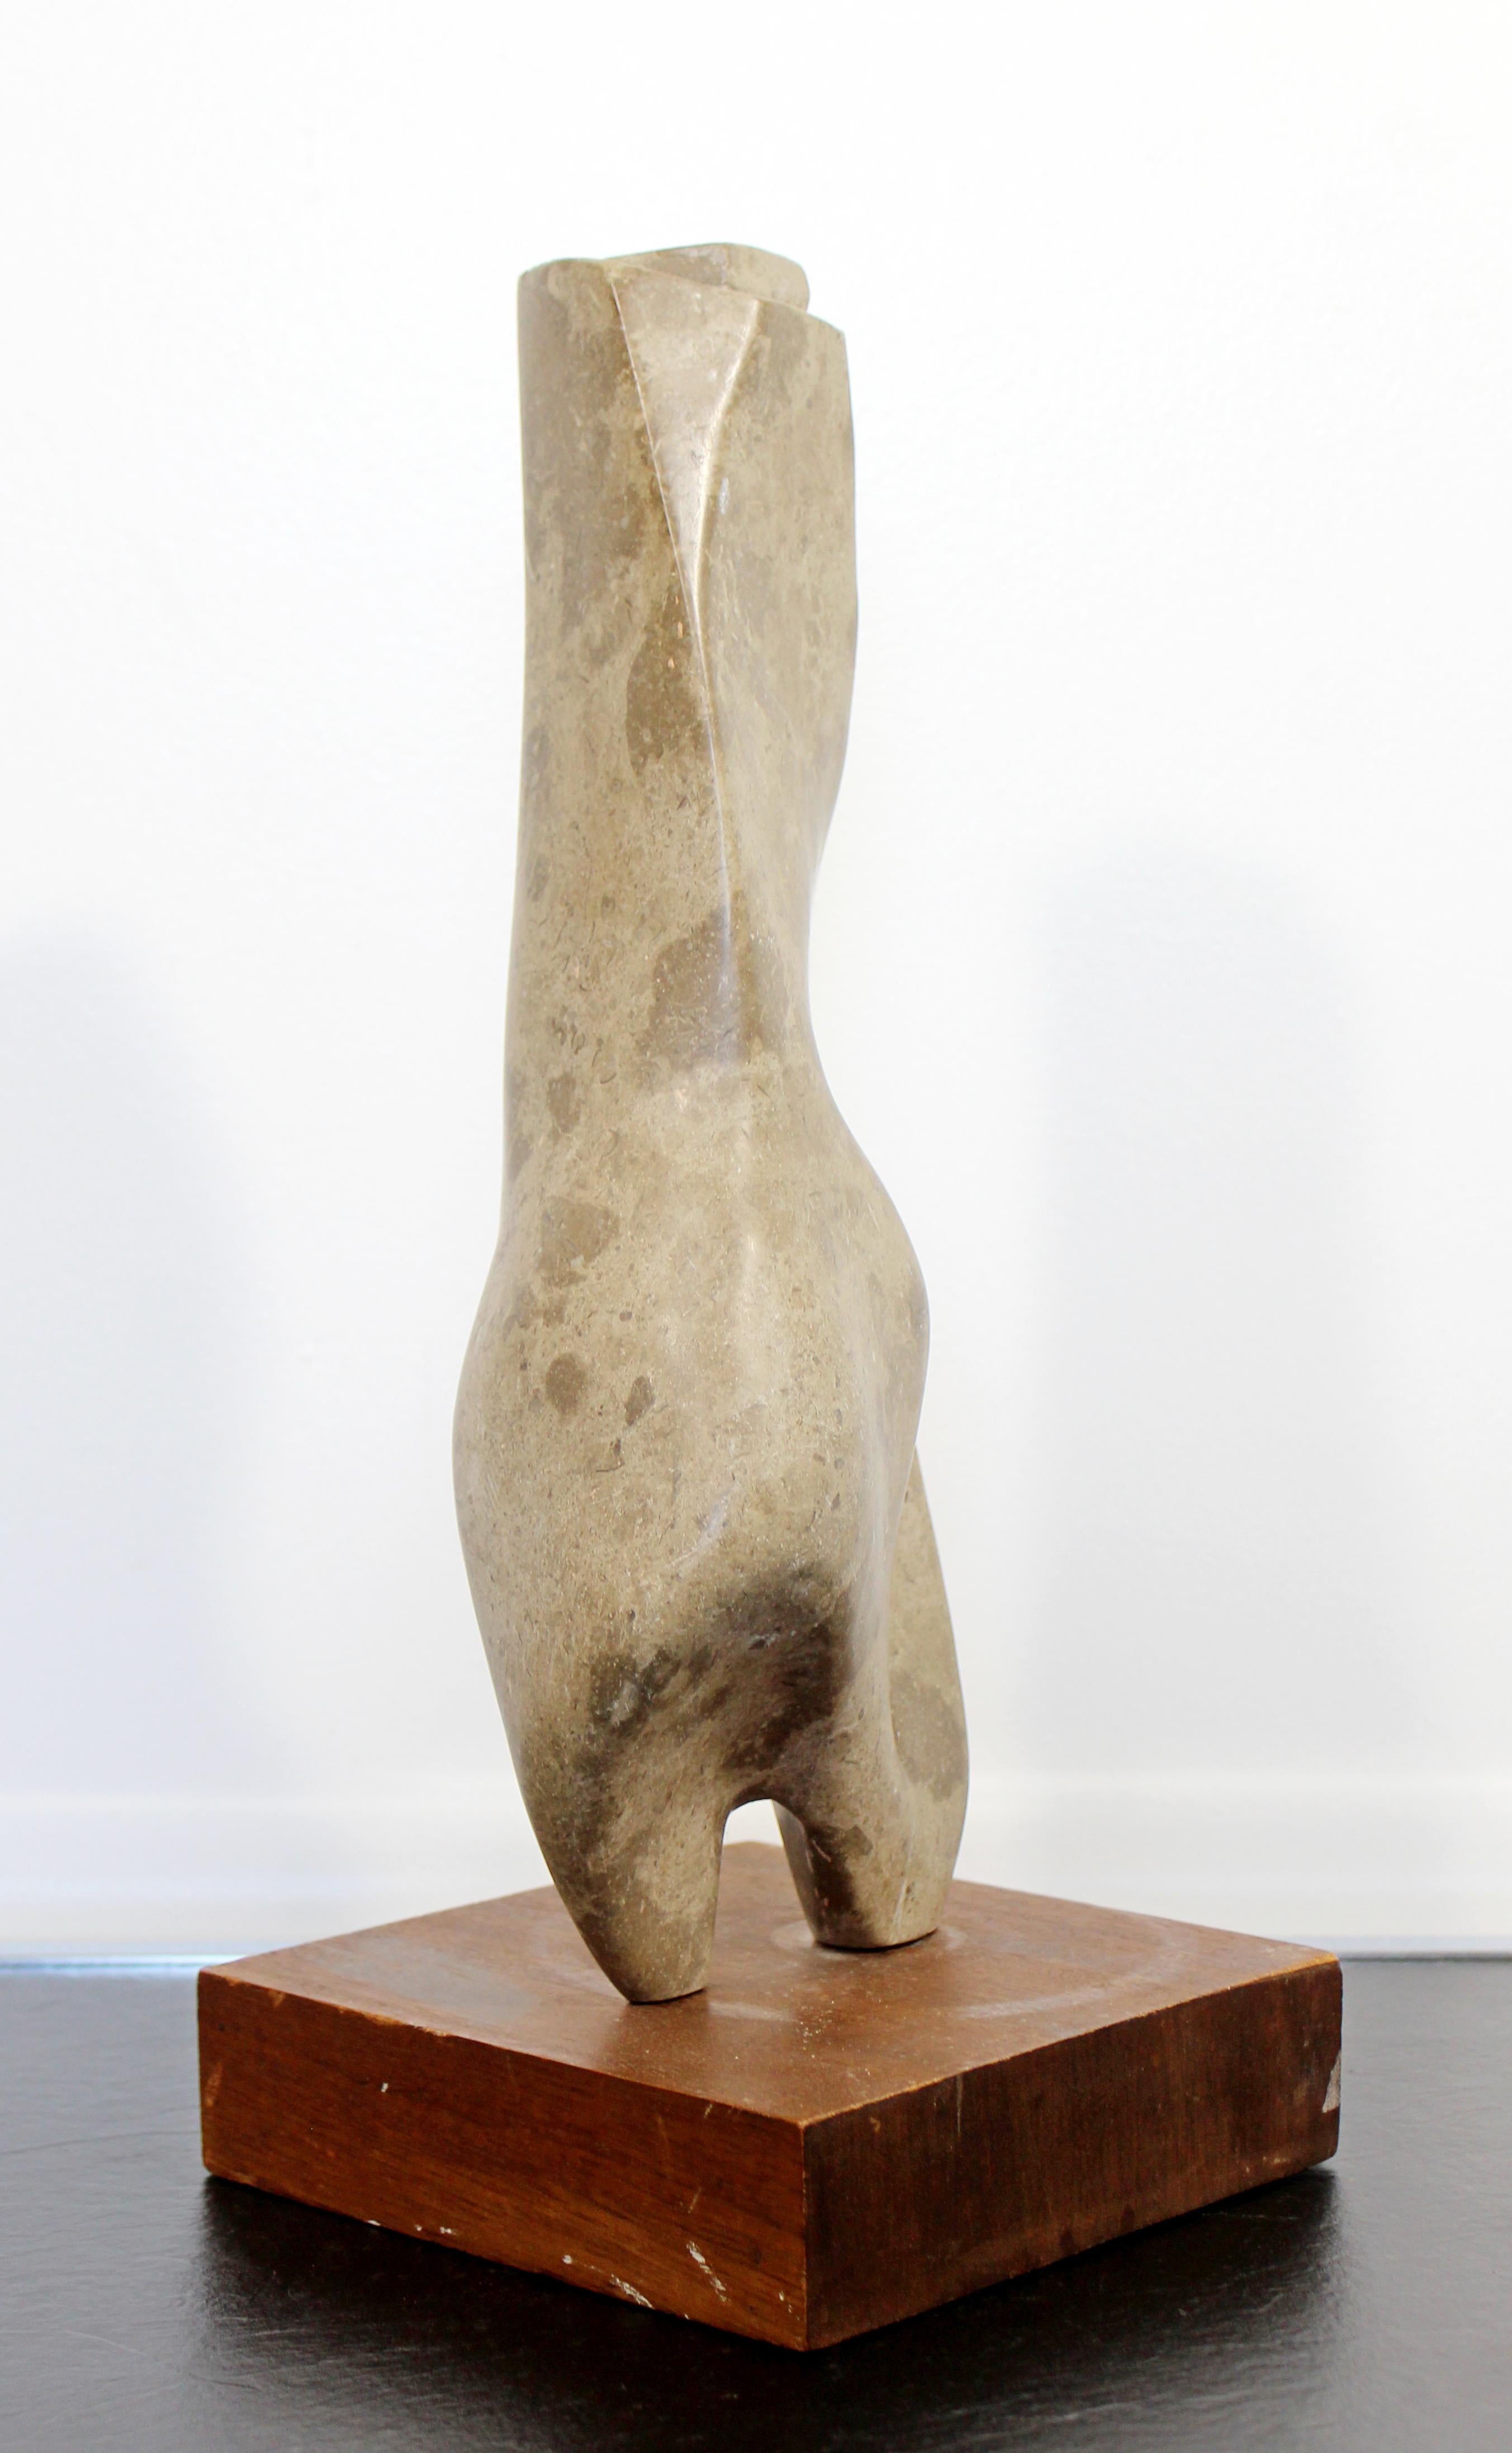 Contemporary Modern Stone Table Sculpture on Wood Base Signed Leonard Schwartz 1